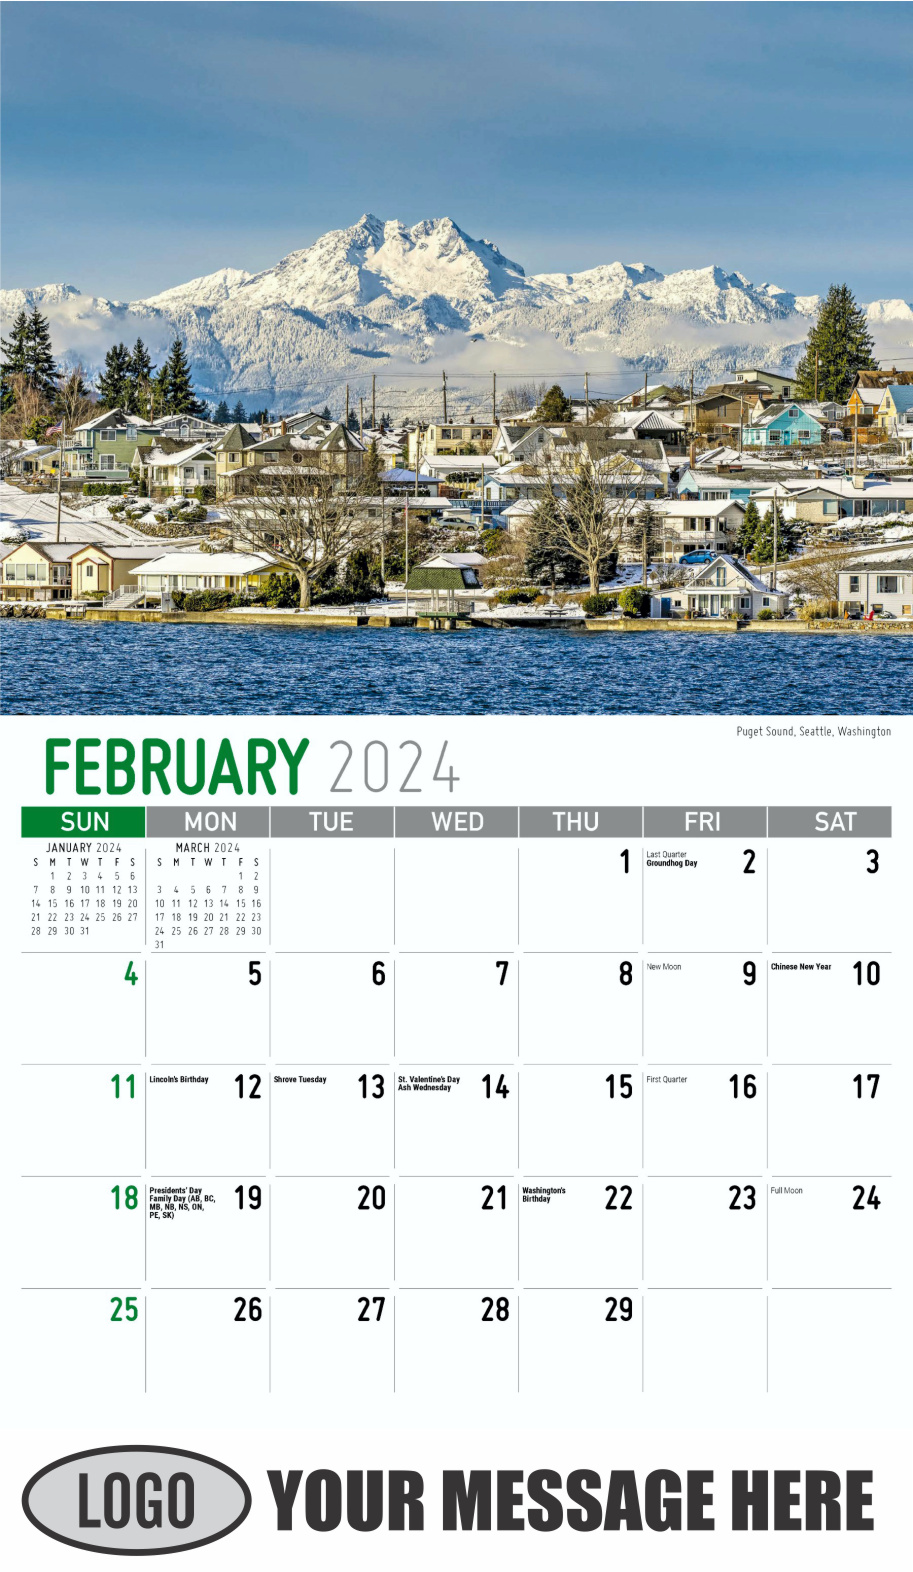 Scenes of America 2024 Business Advertising Wall Calendar - February